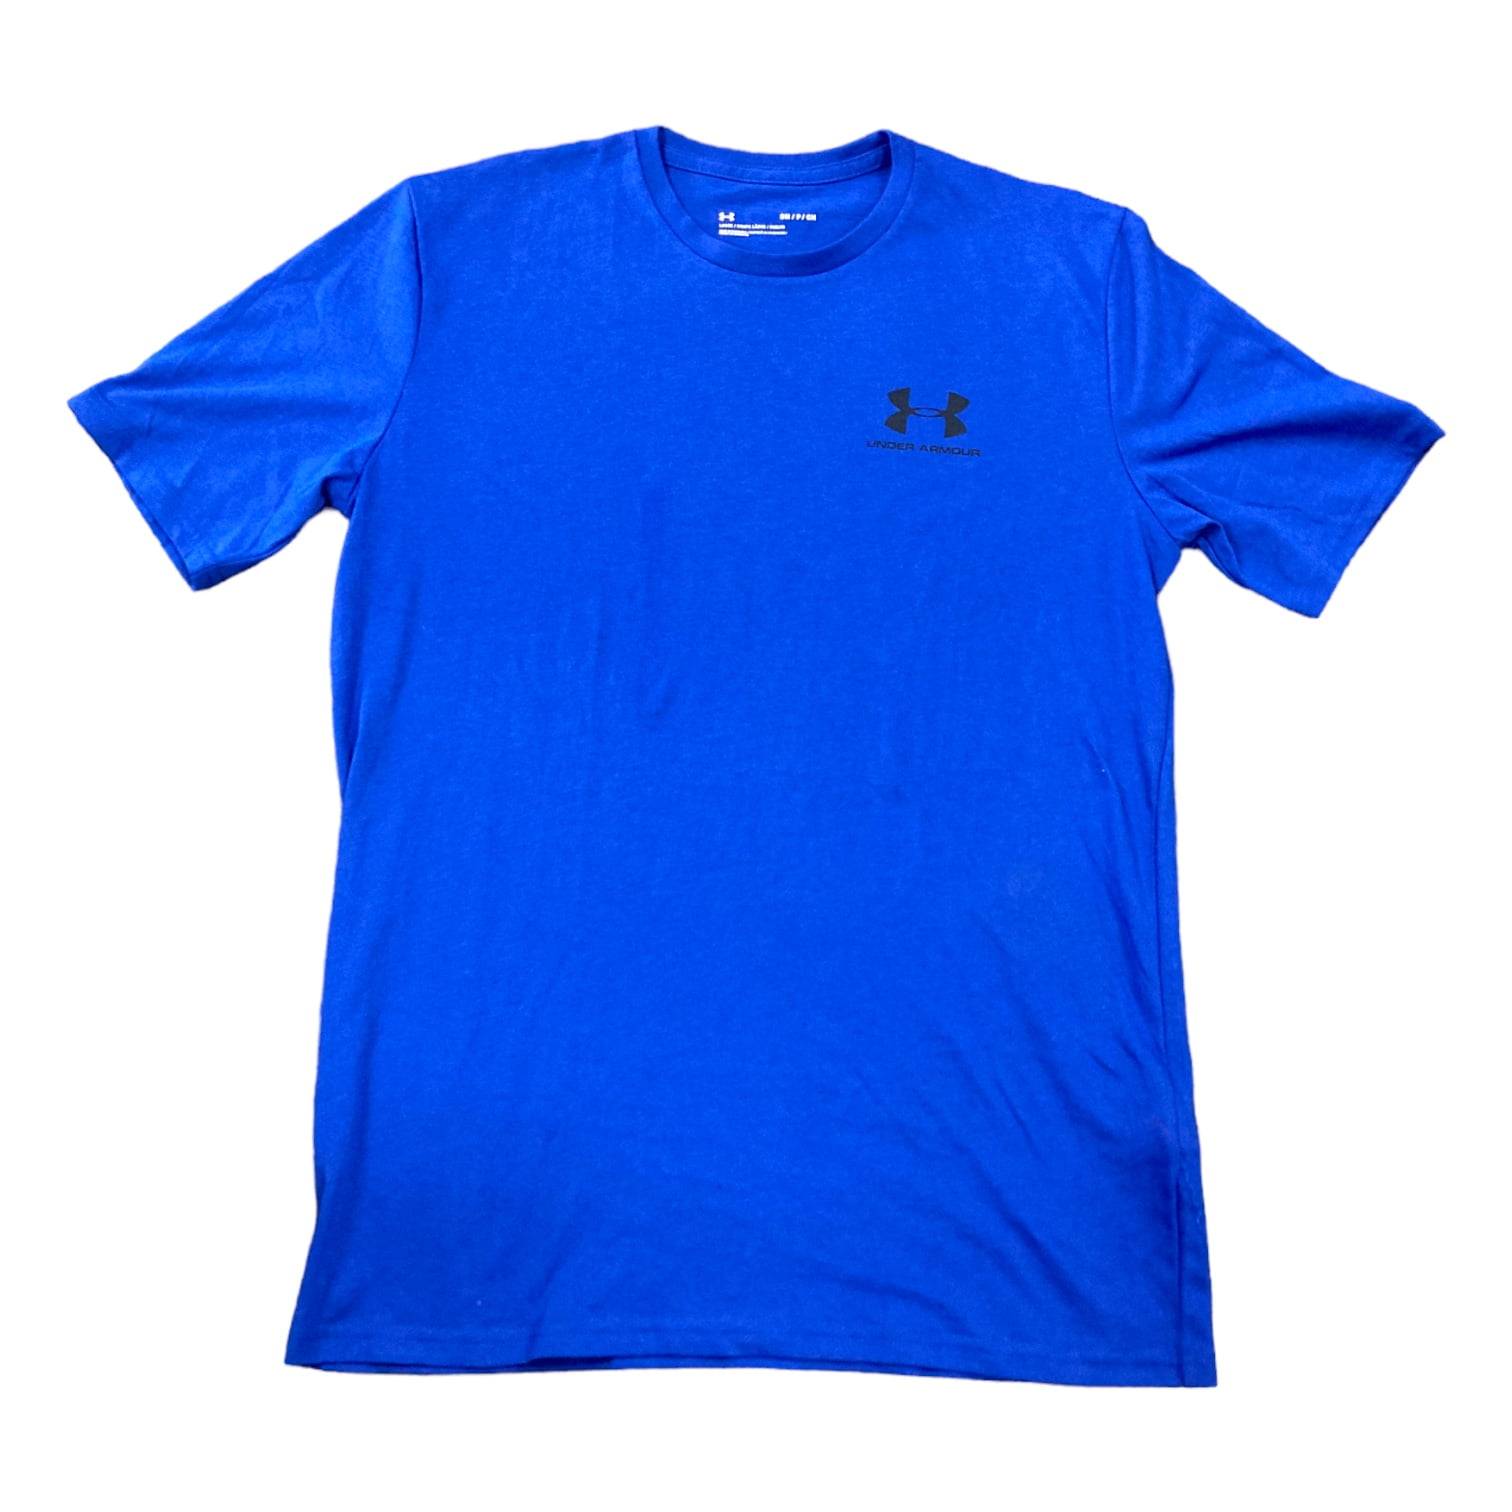 Under Armour Men's Sportstyle Left Chest Short Sleeve Heat Gear T-Shirt  (Royal Blue, S)